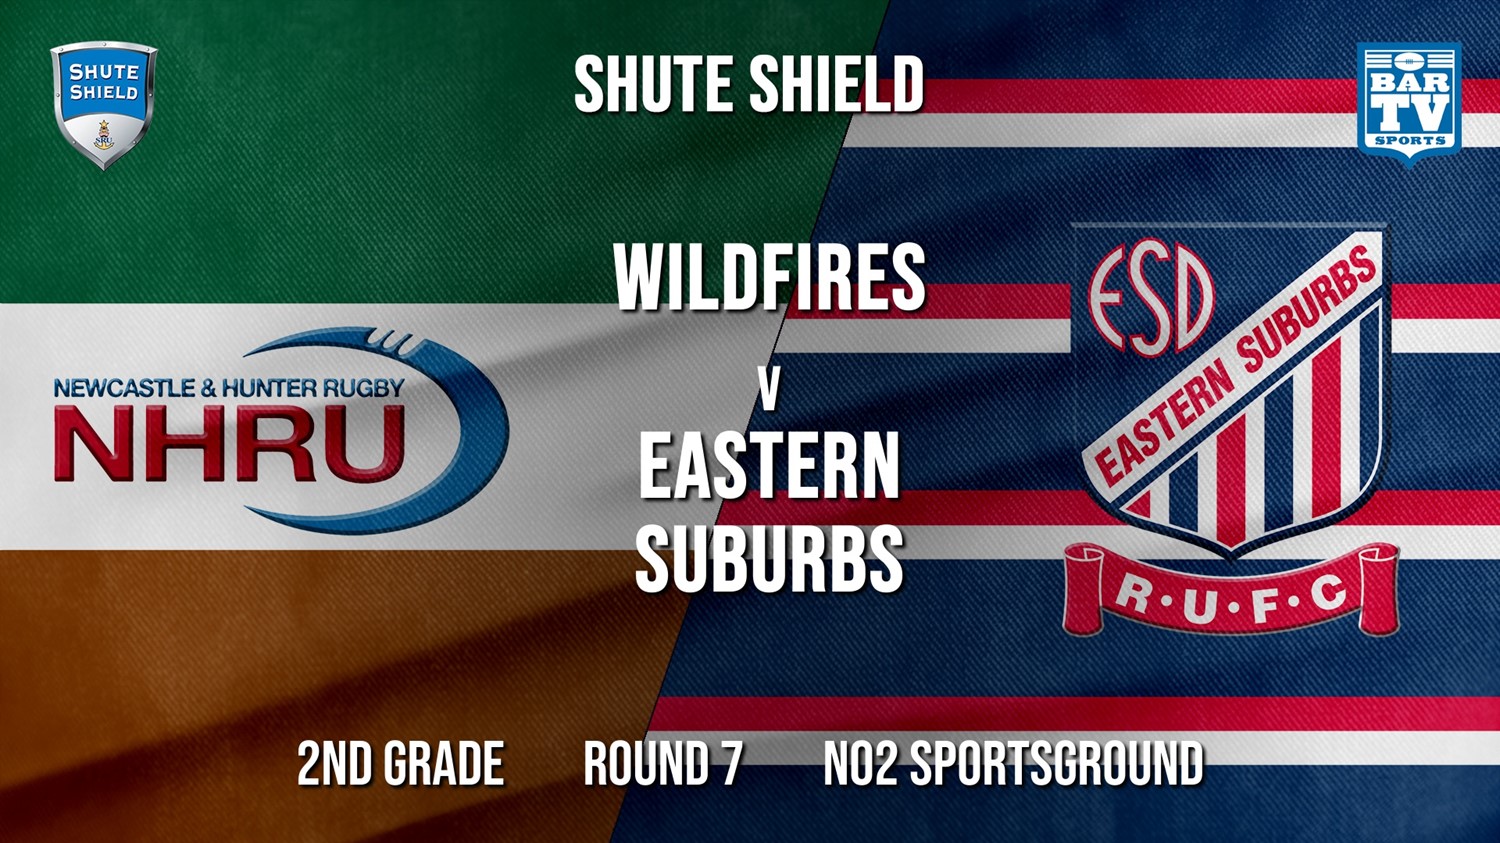 Shute Shield Round 7 - 2nd Grade - NHRU Wildfires v Eastern Suburbs Minigame Slate Image